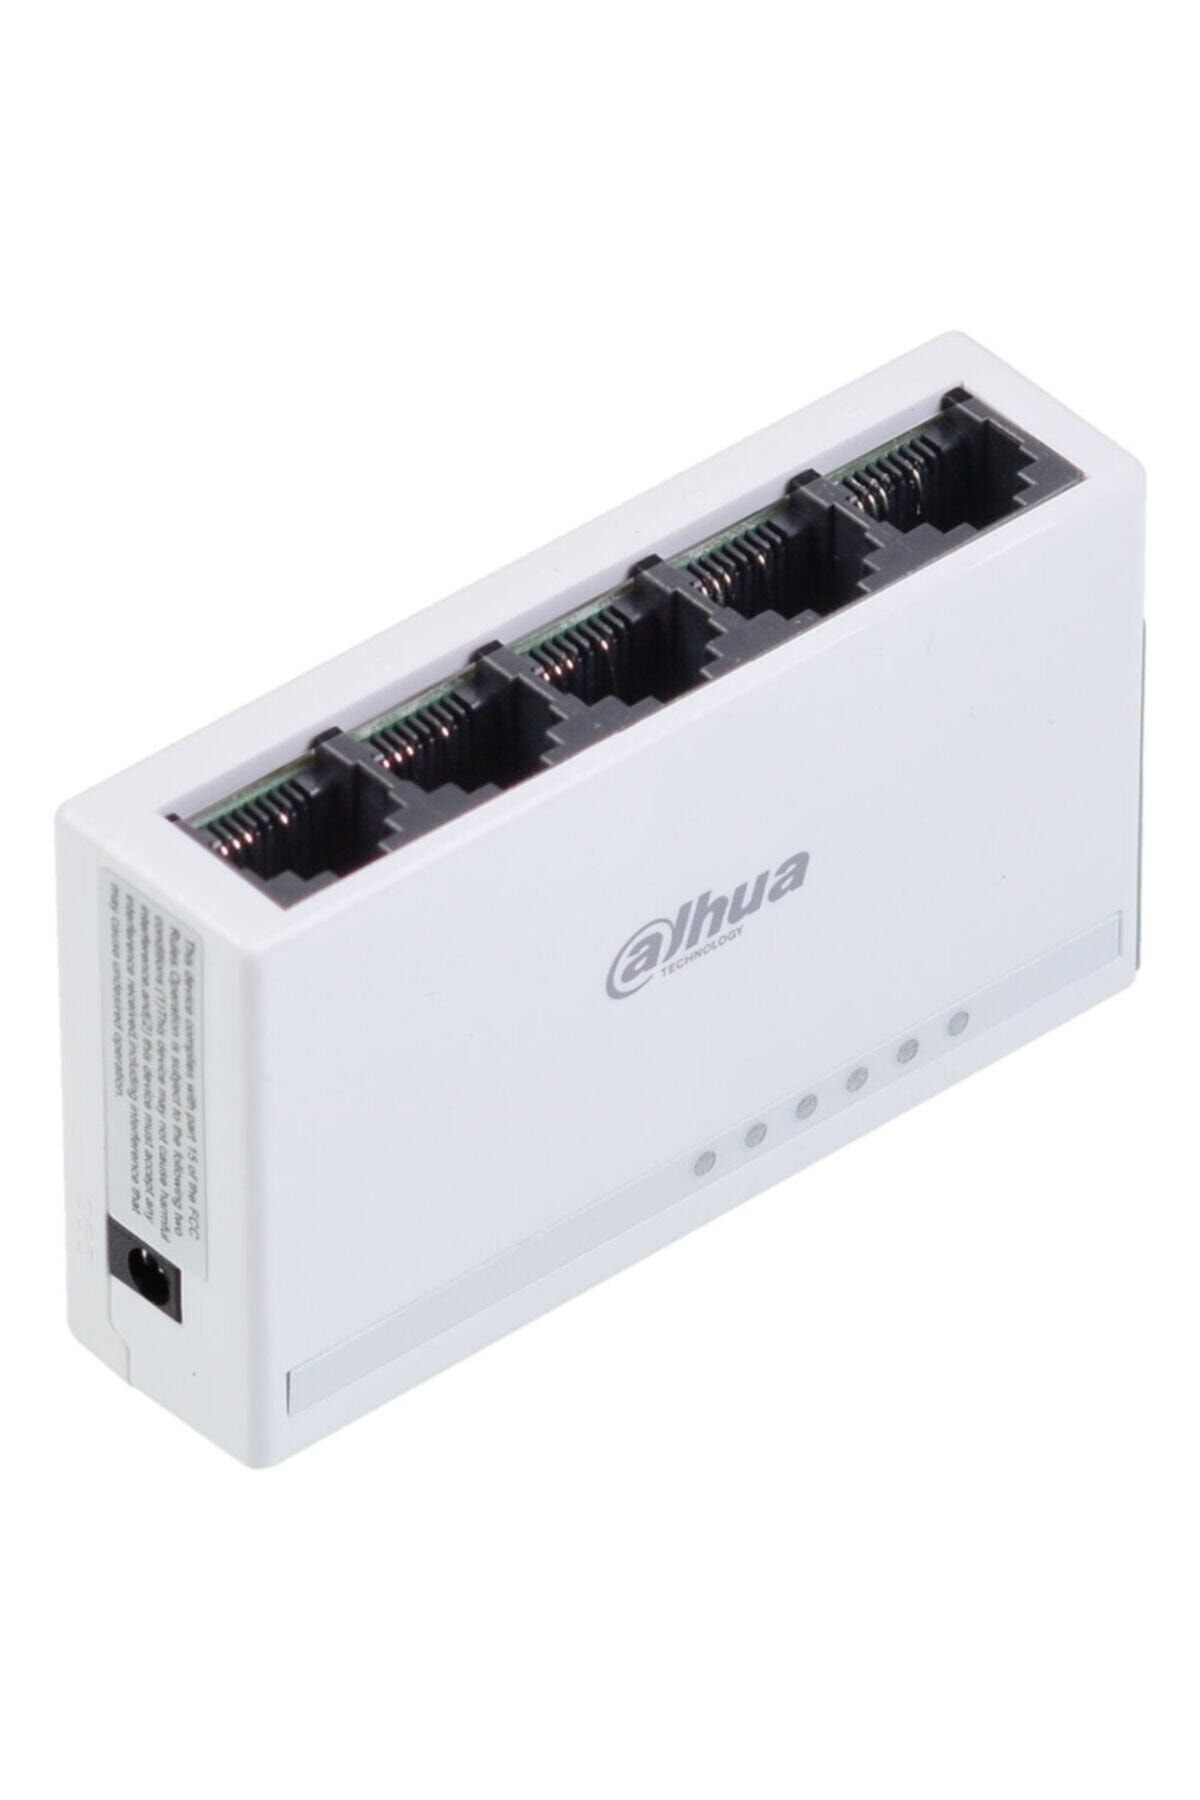 Dahua 5-port Desktop Fast Ethernet Switch (internet Kablo Çoğaltıcı) Dh-pfs-3005